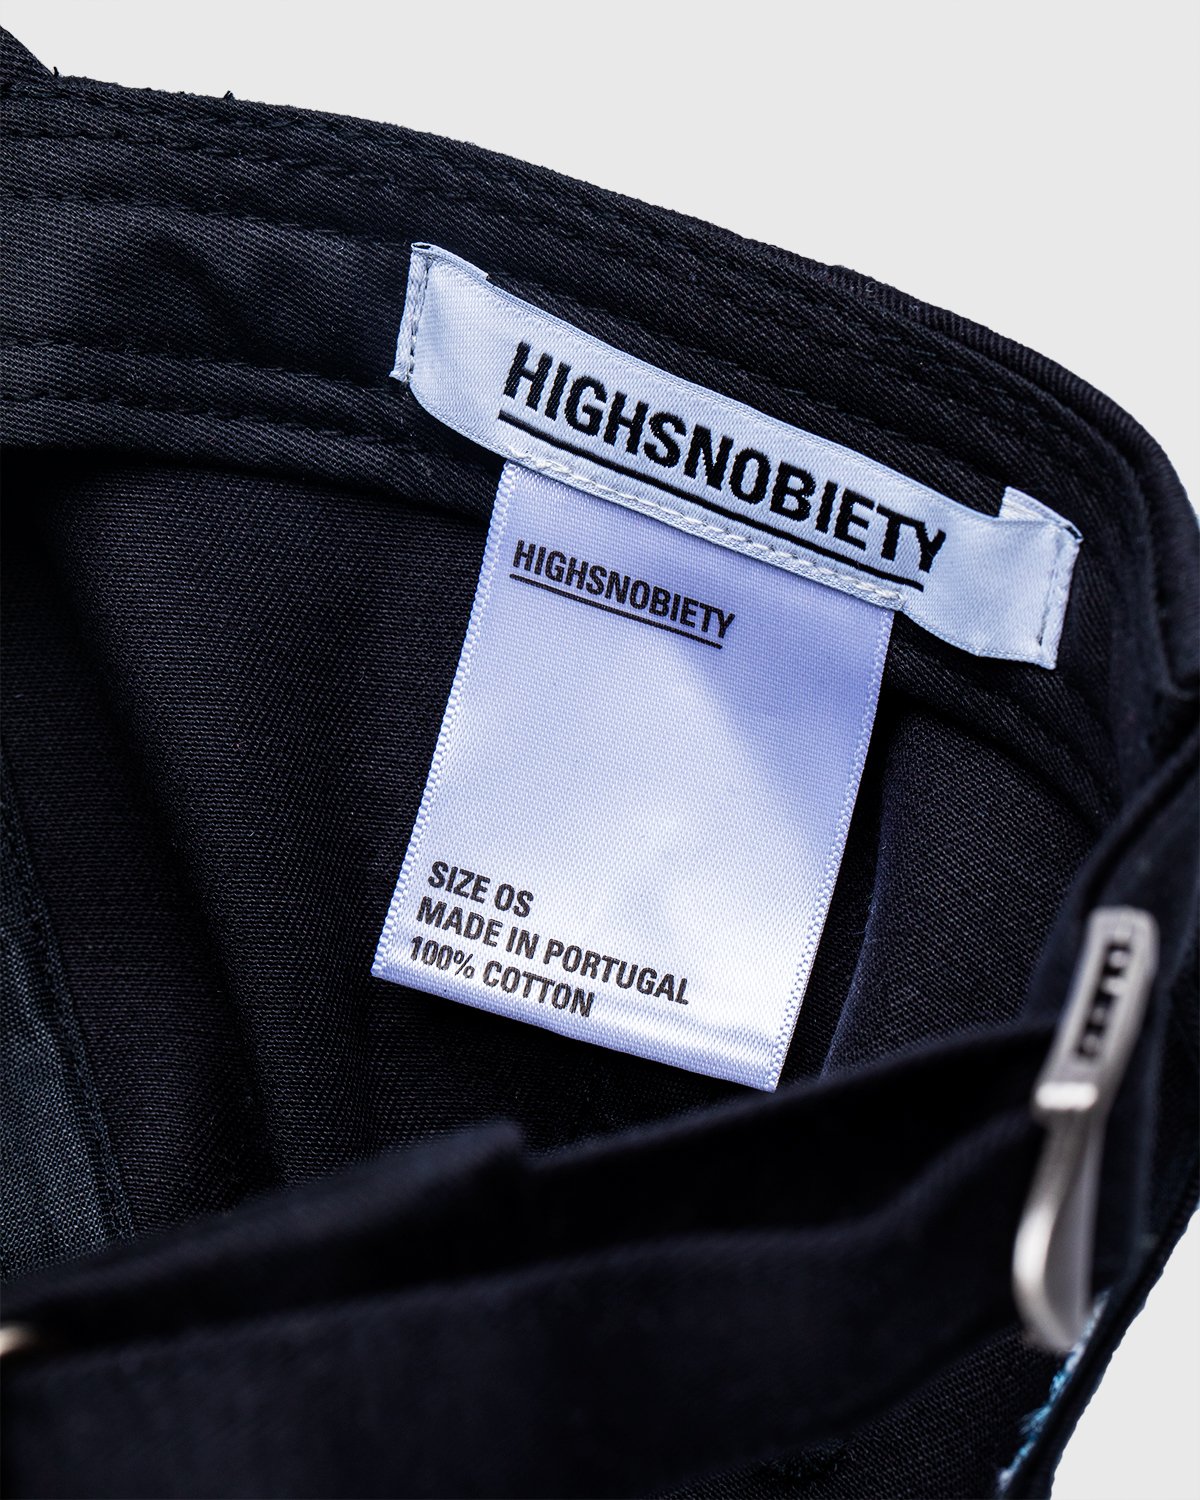 Highsnobiety - Not In Paris 3 x Galerie Perrotin Cap Black - Accessories - Black - Image 4